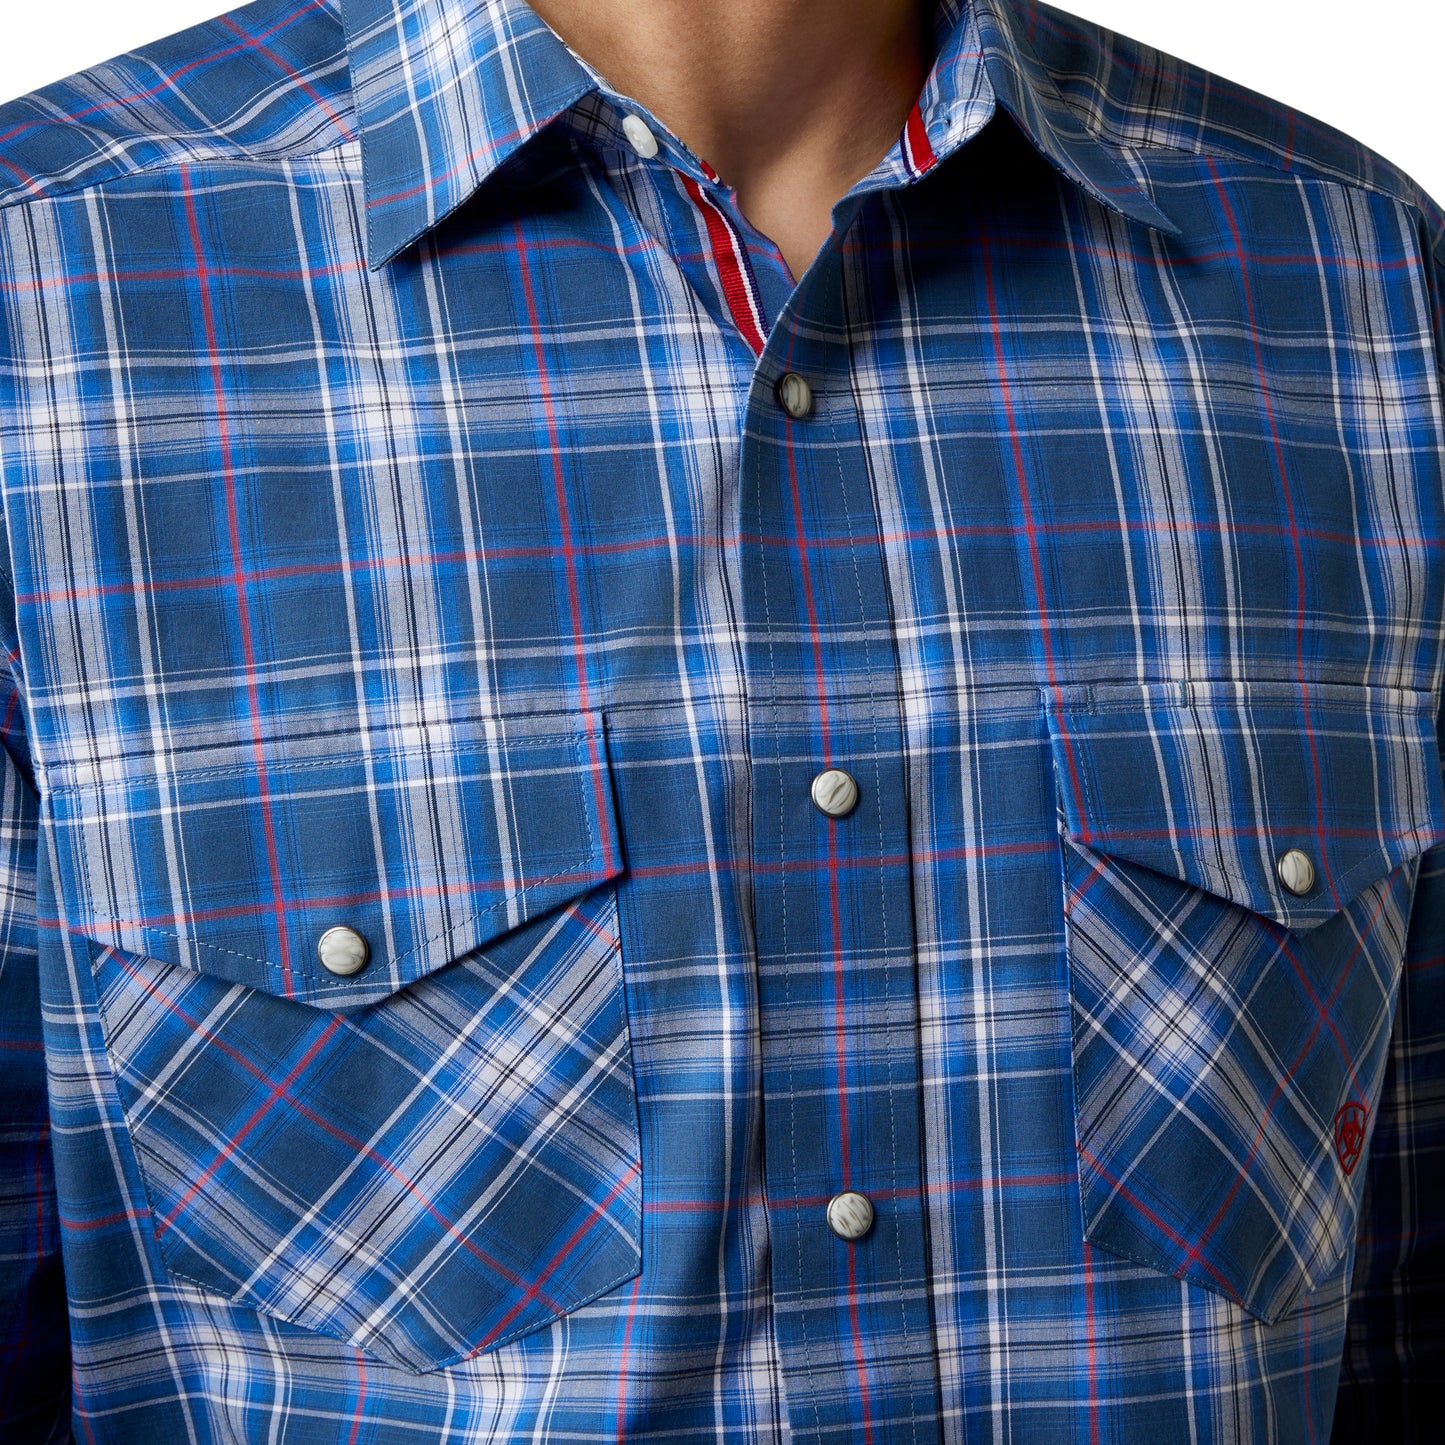 Ariat Men's Pro Series Jaxton Snap Classic Fit Shirt Blue